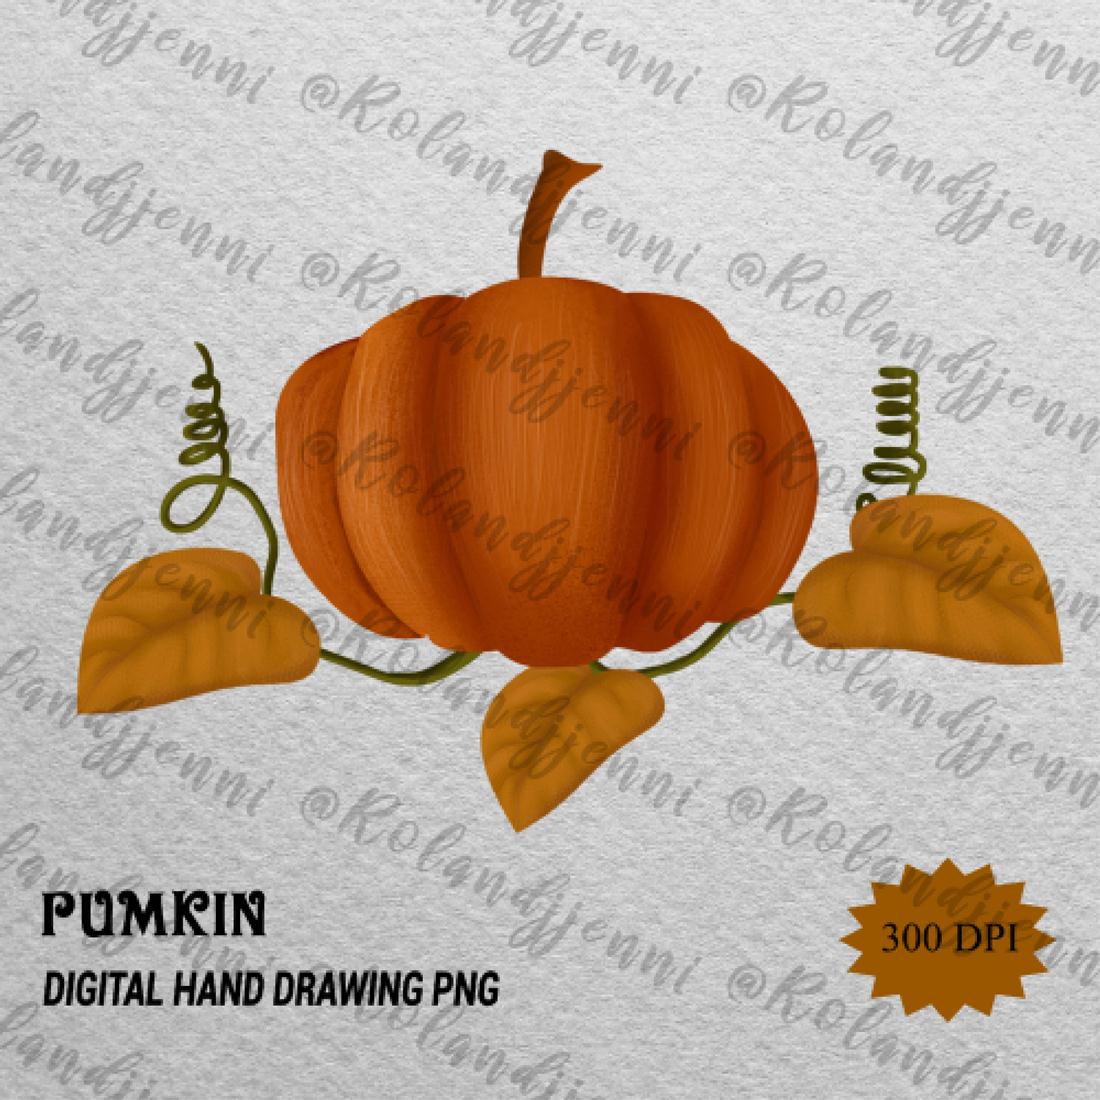 Halloween Pumpkin Digital Hand Drawing PNG PSD cover image.